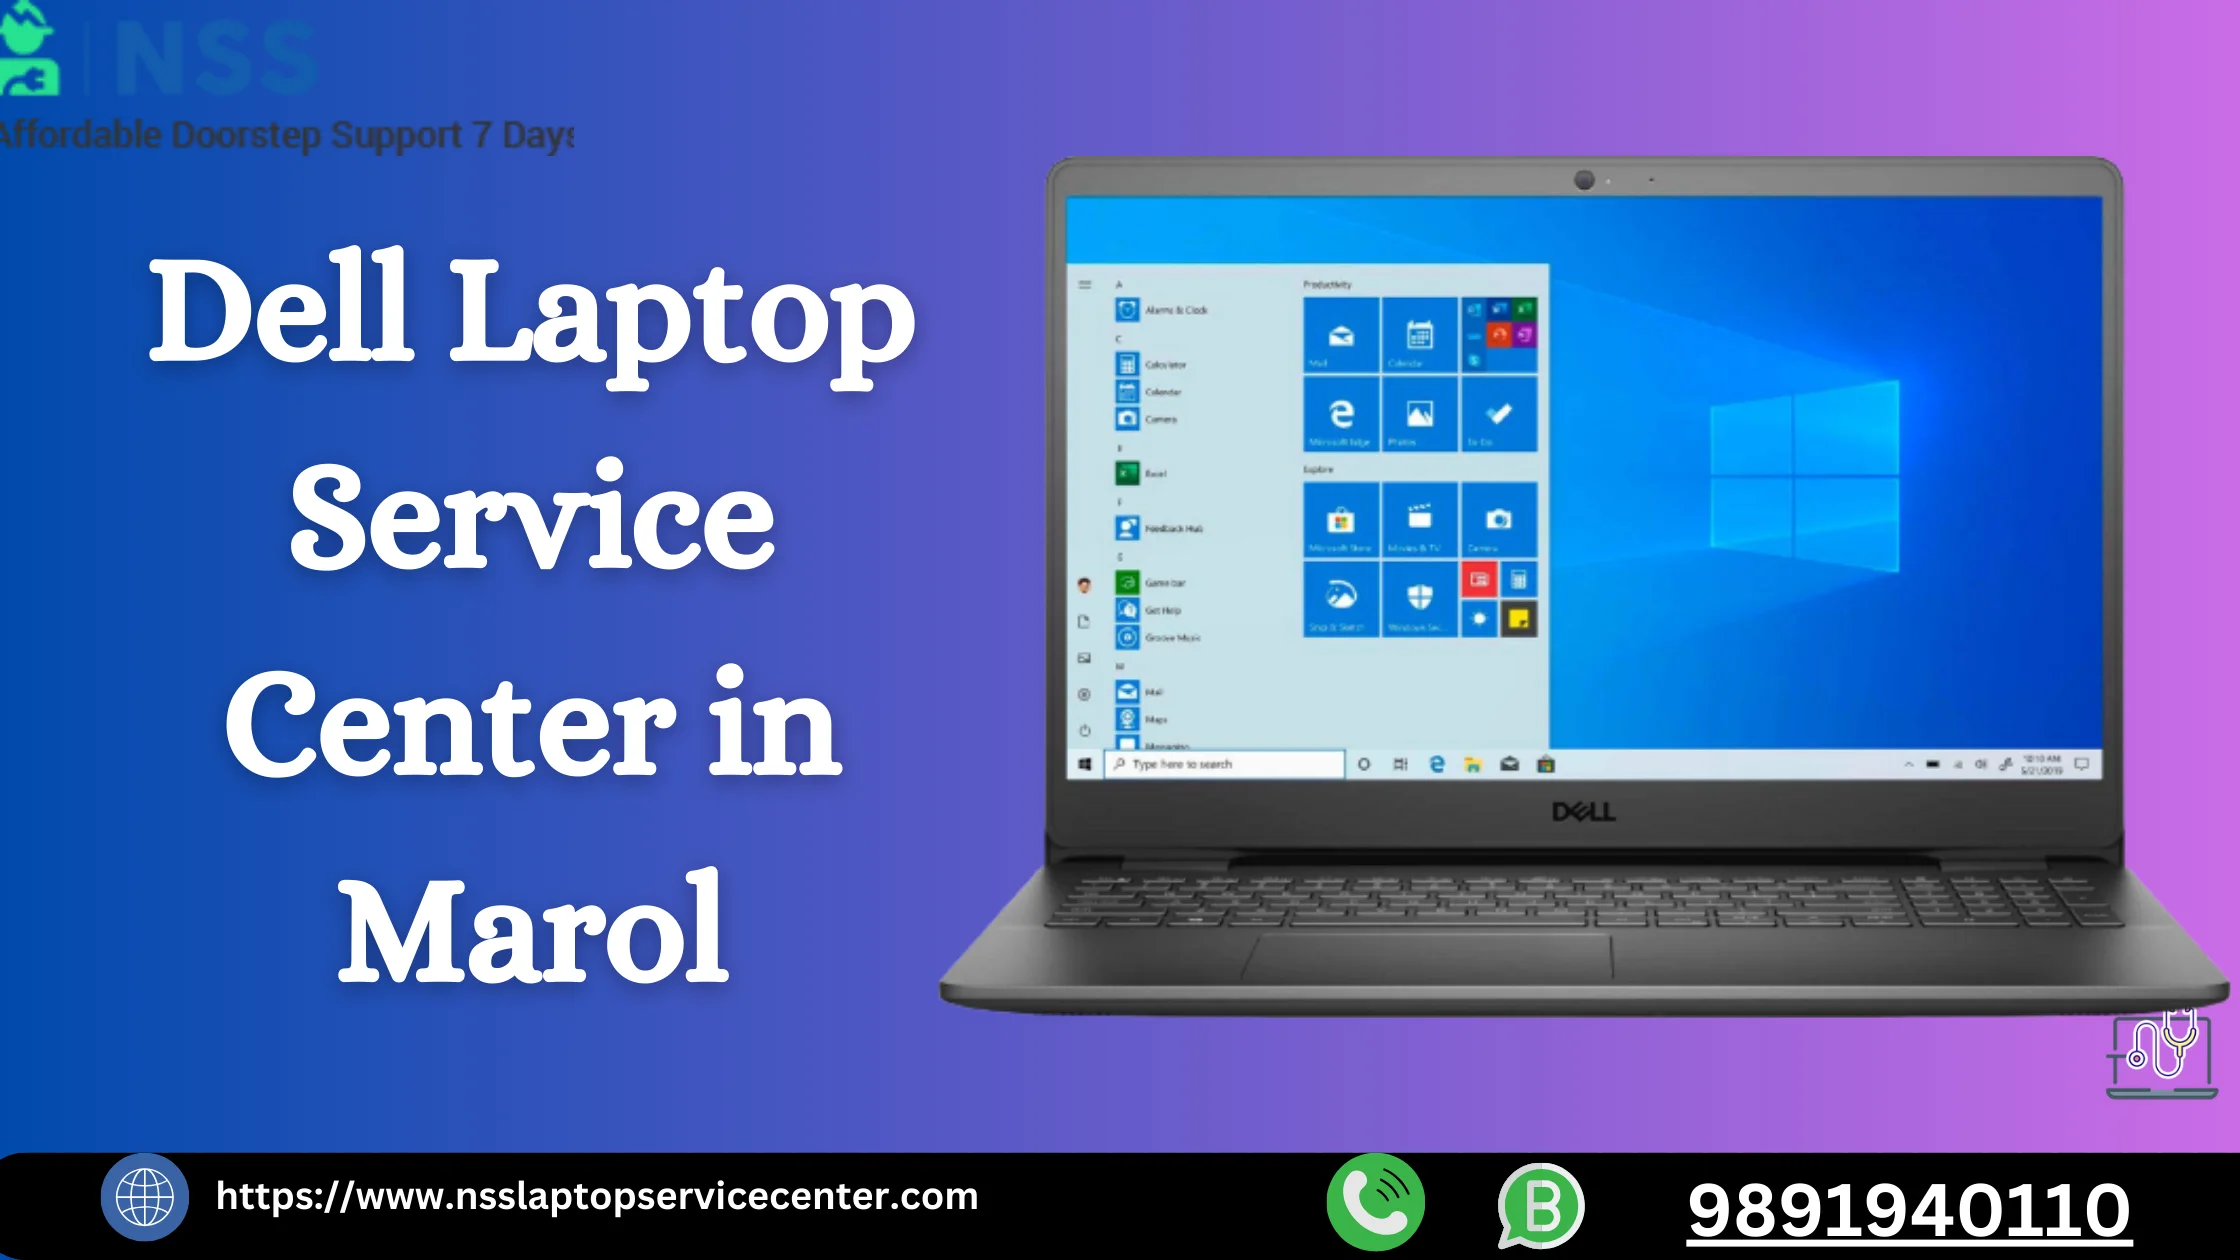 Dell Laptop Service Center in Marol Near Mumbai